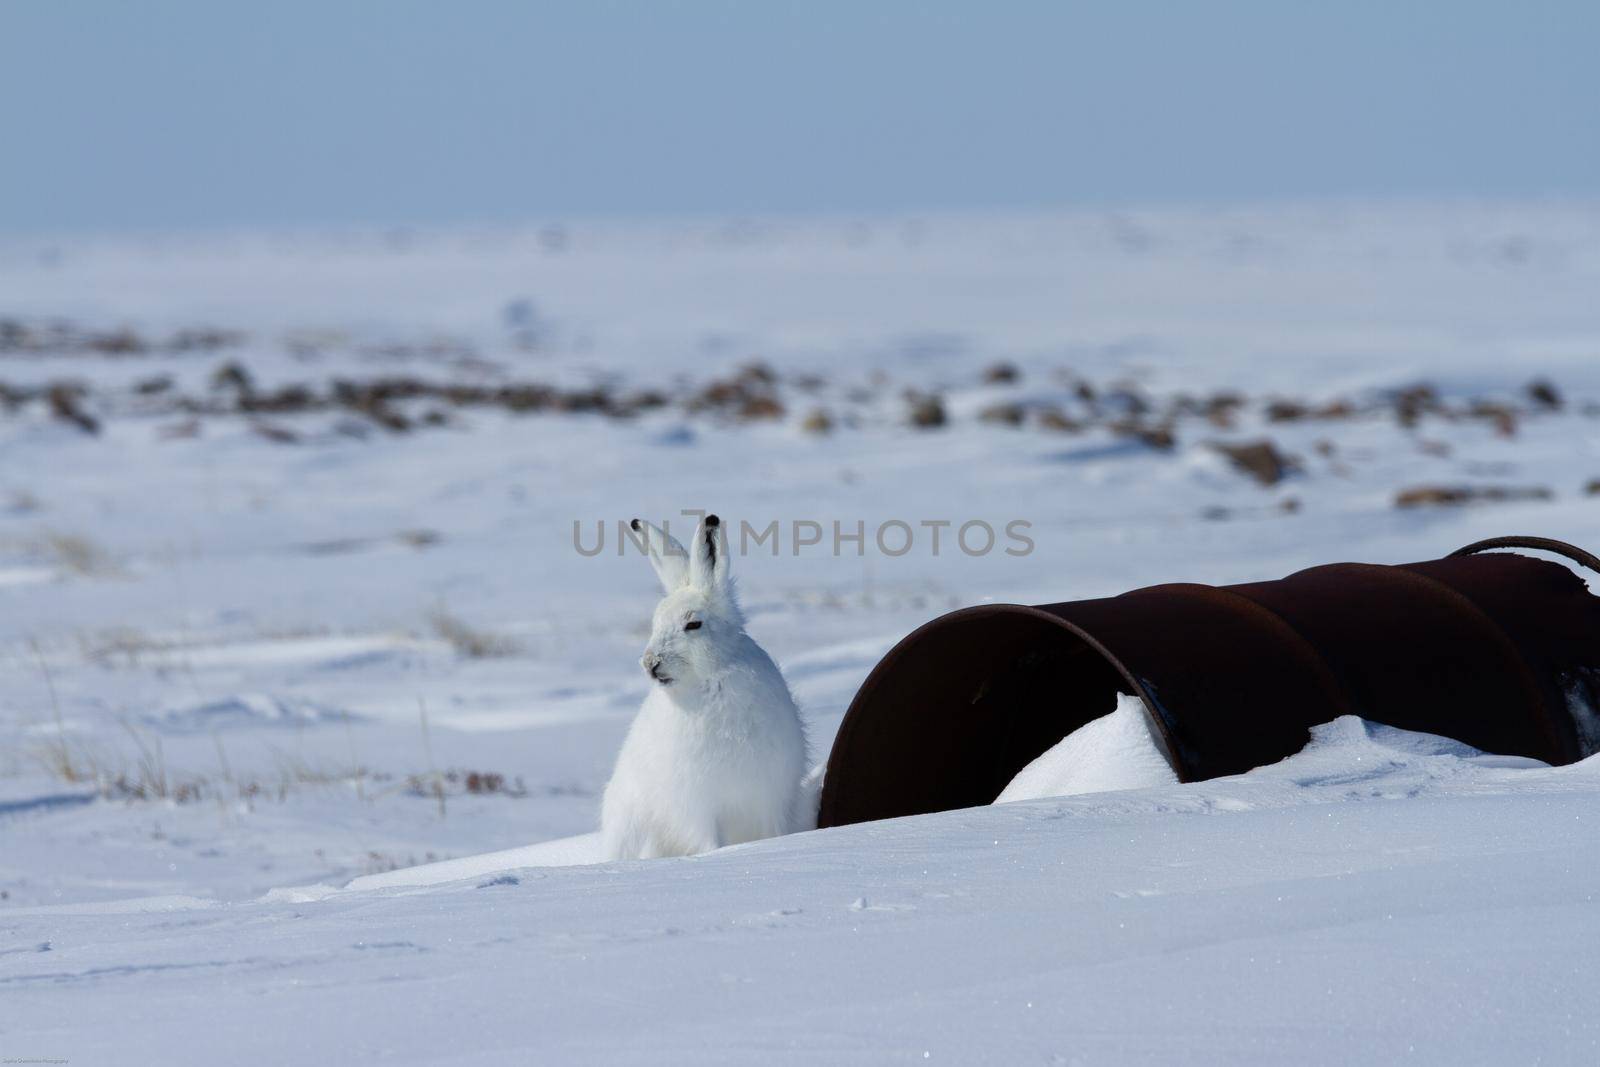 Arctic hare, Lepus arcticus, sitting on snow near an old fuel barrel, Nunavut Canada